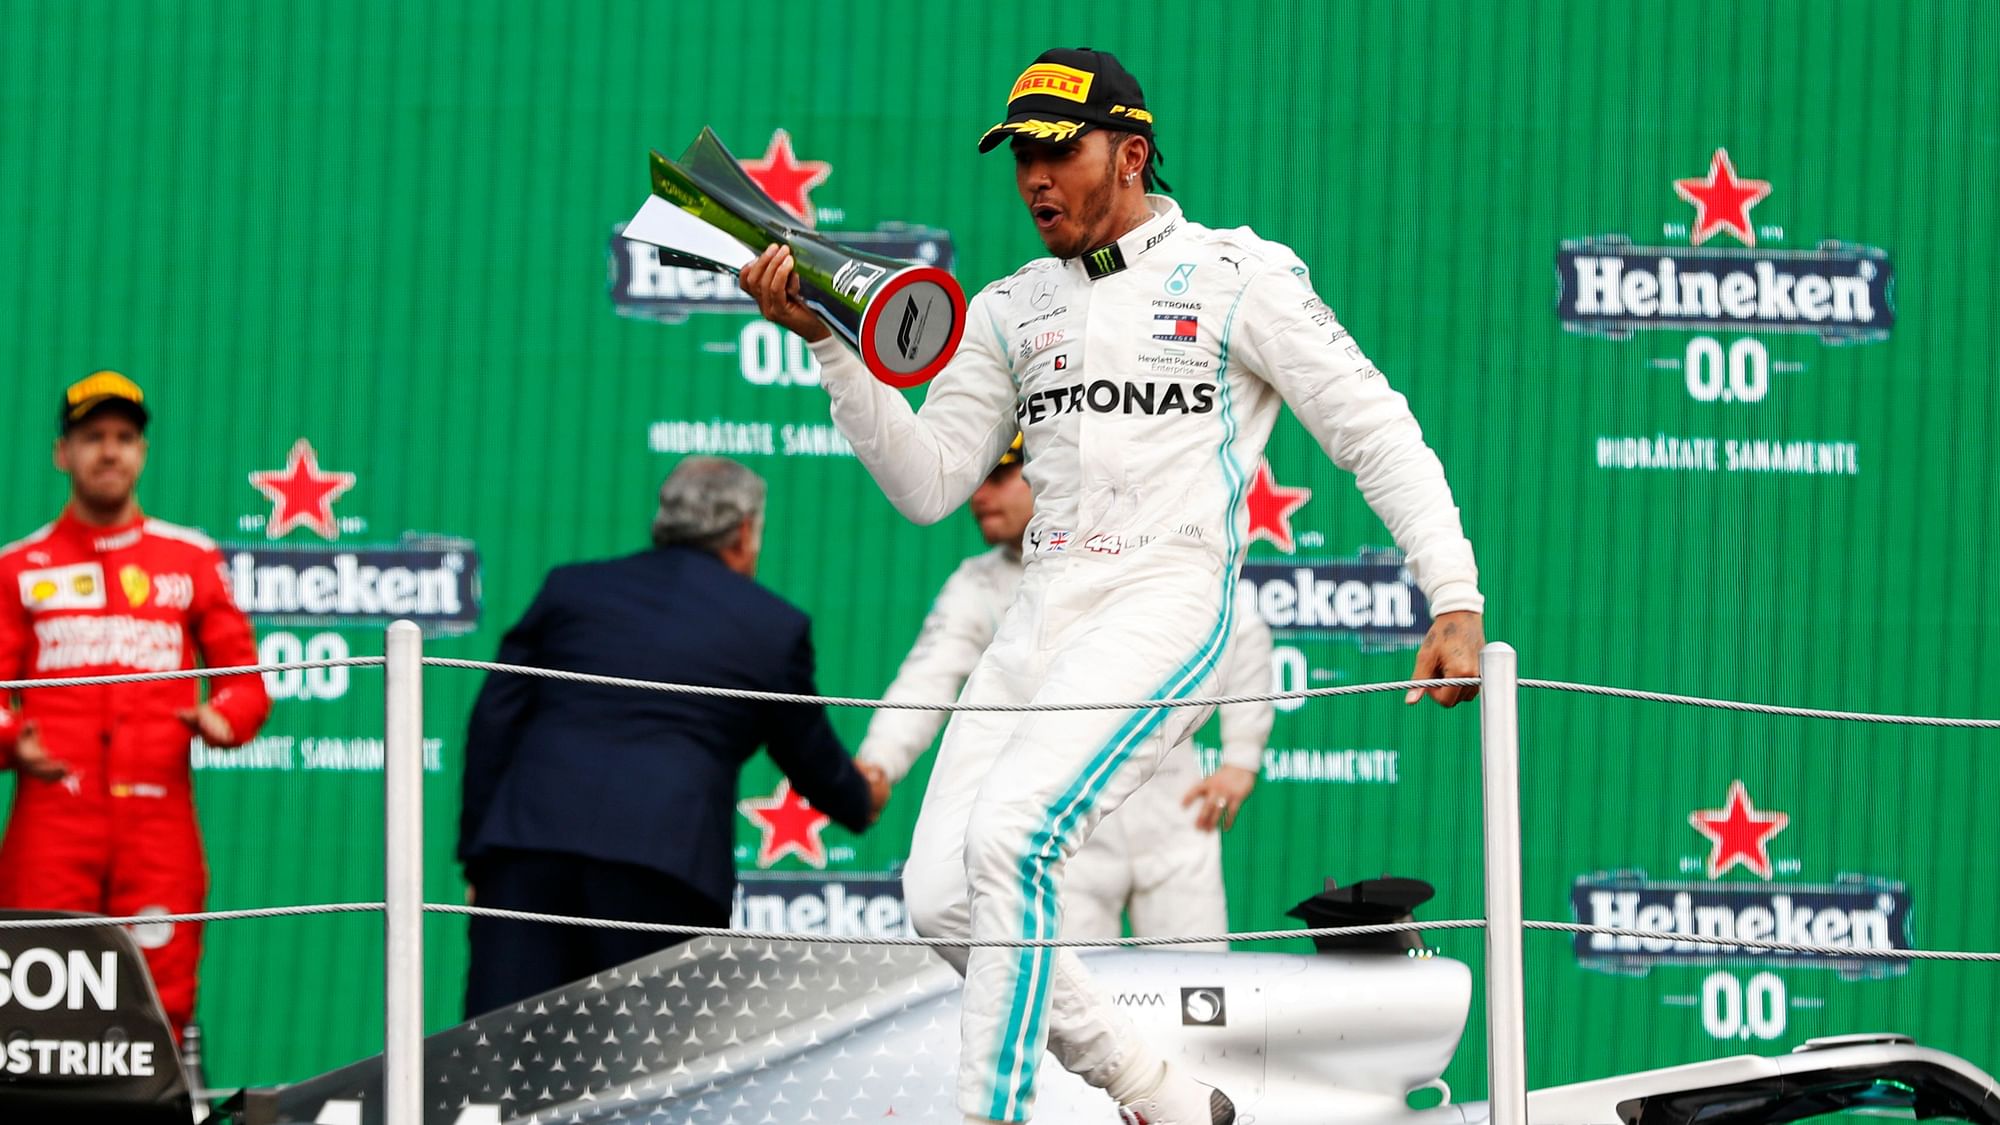 Mercedes driver Lewis Hamilton celebrates on the podium after winning